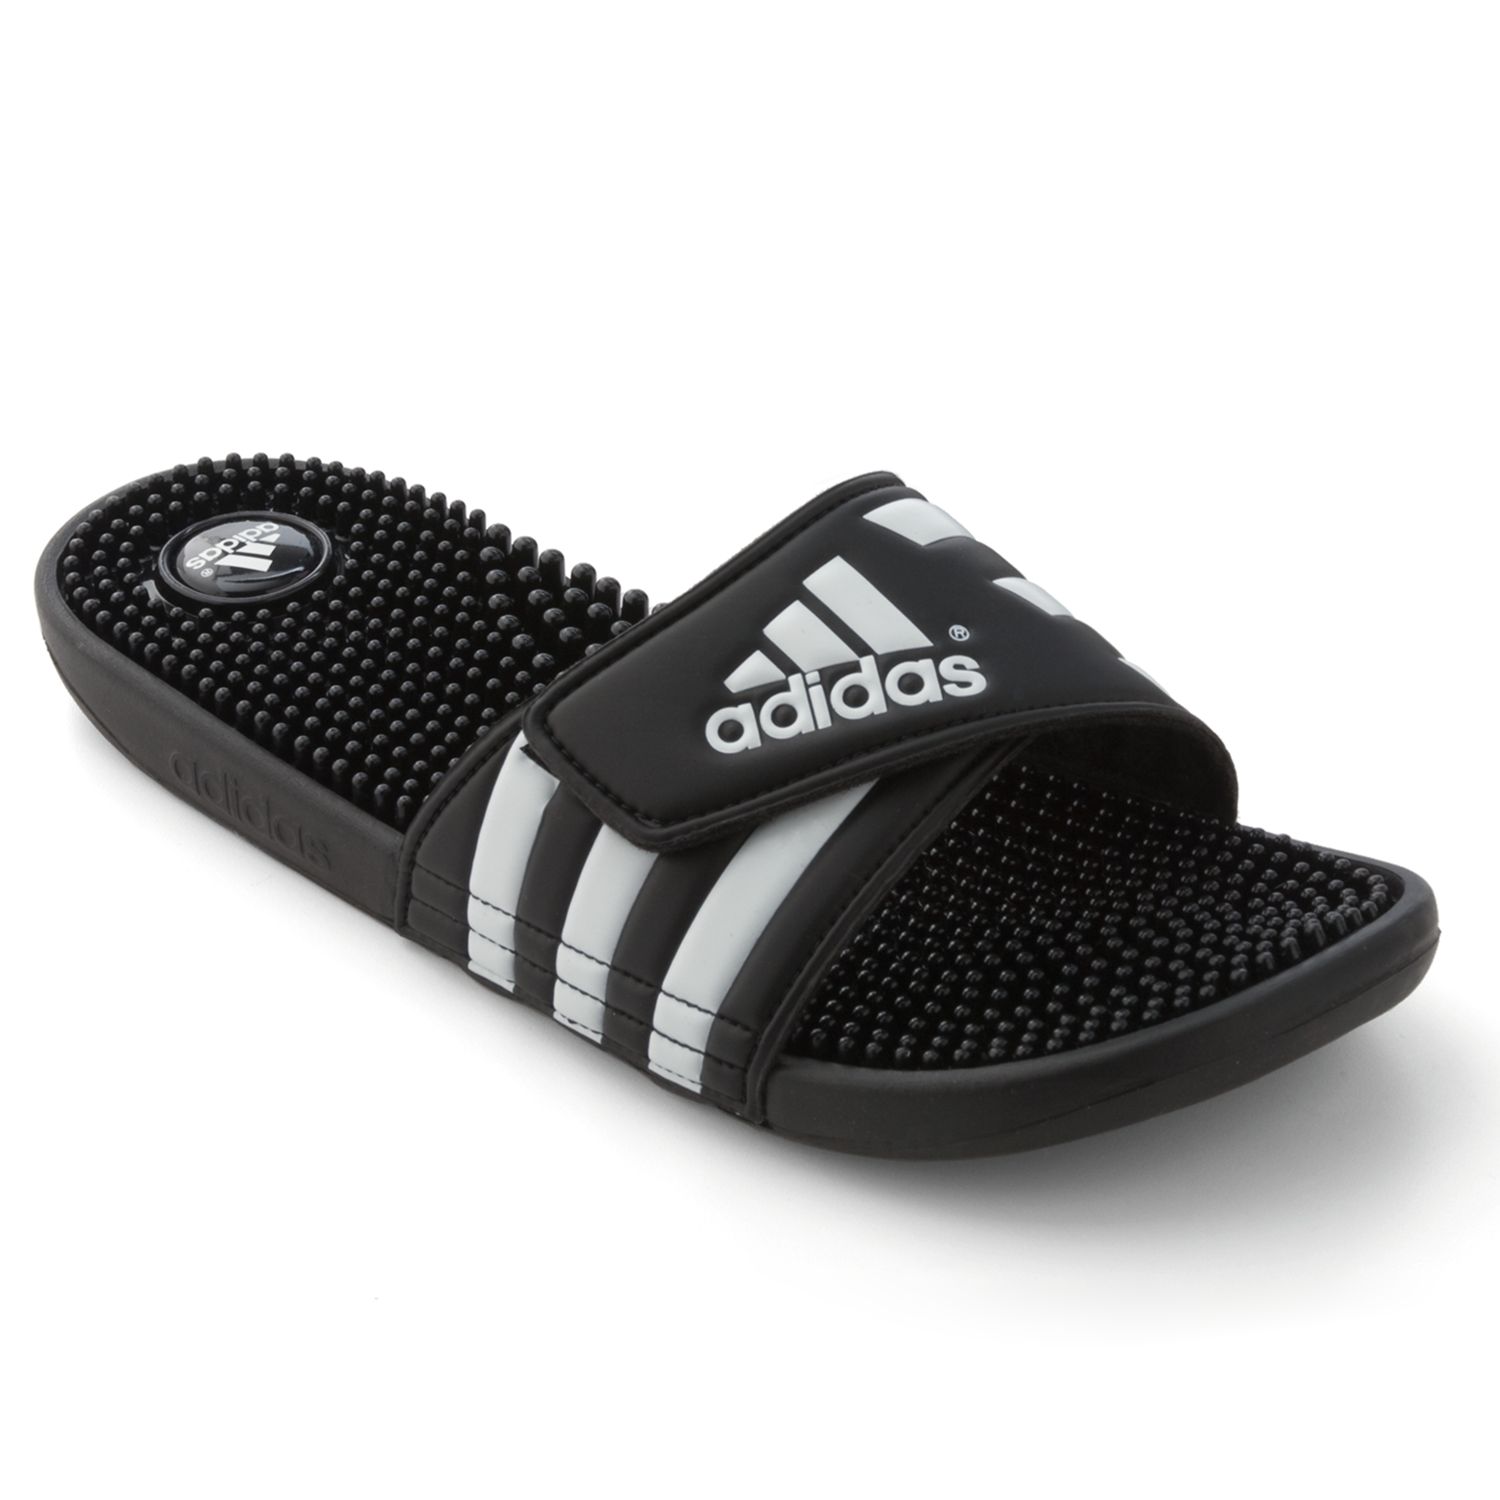 adidas adissage women's sandals